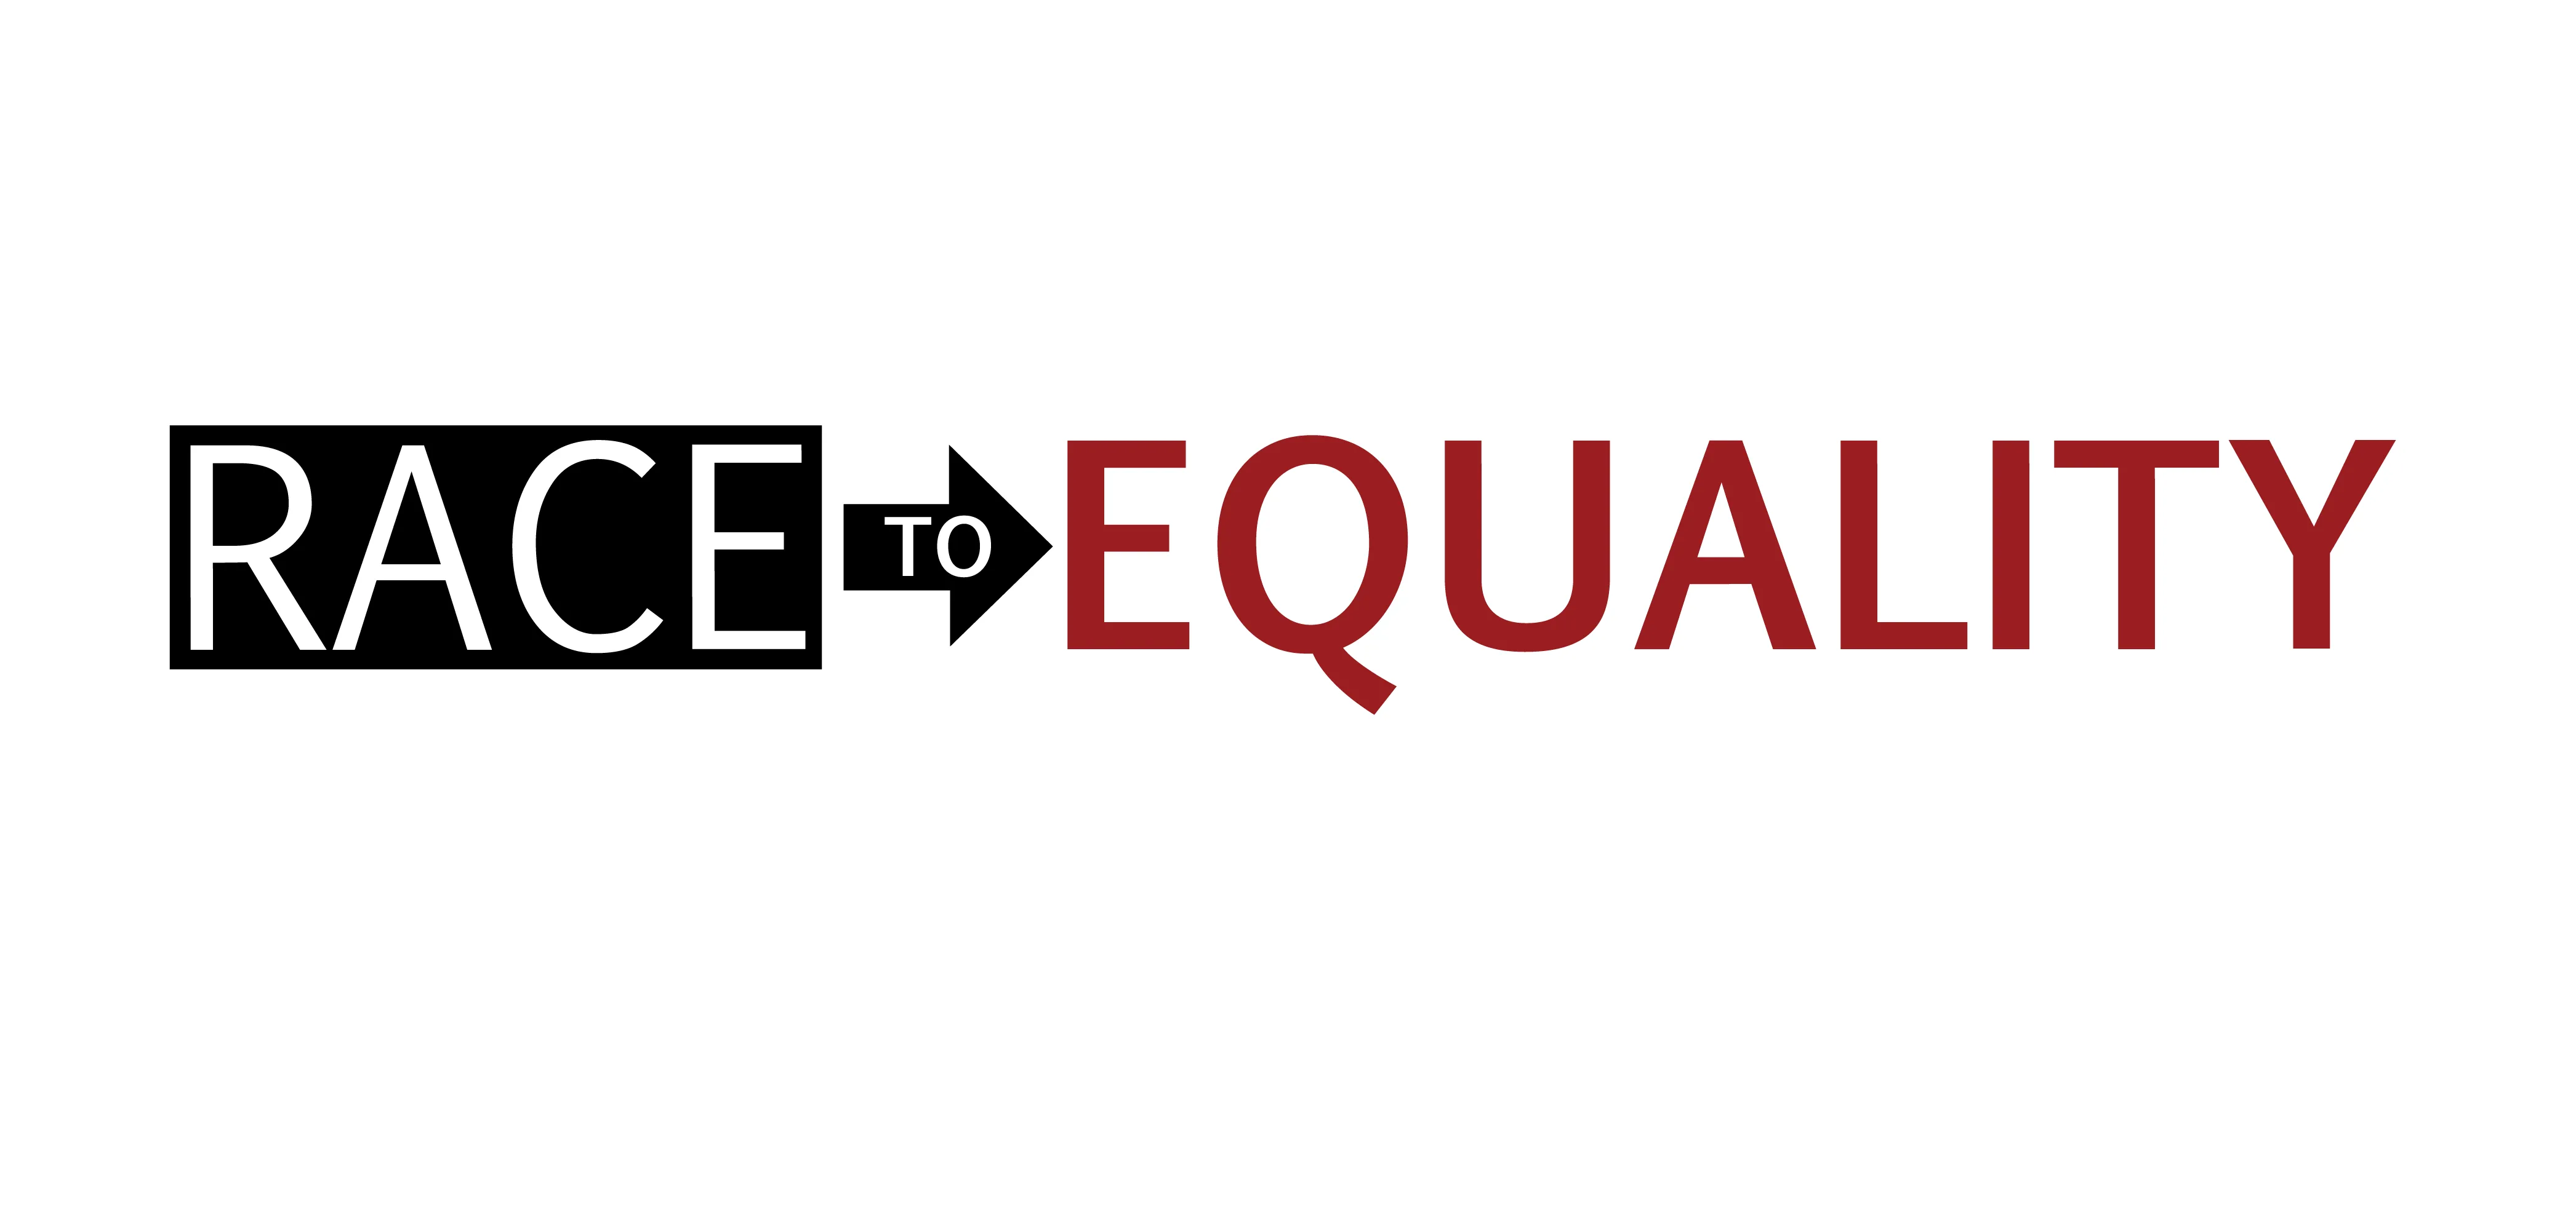 Race to Equality logo